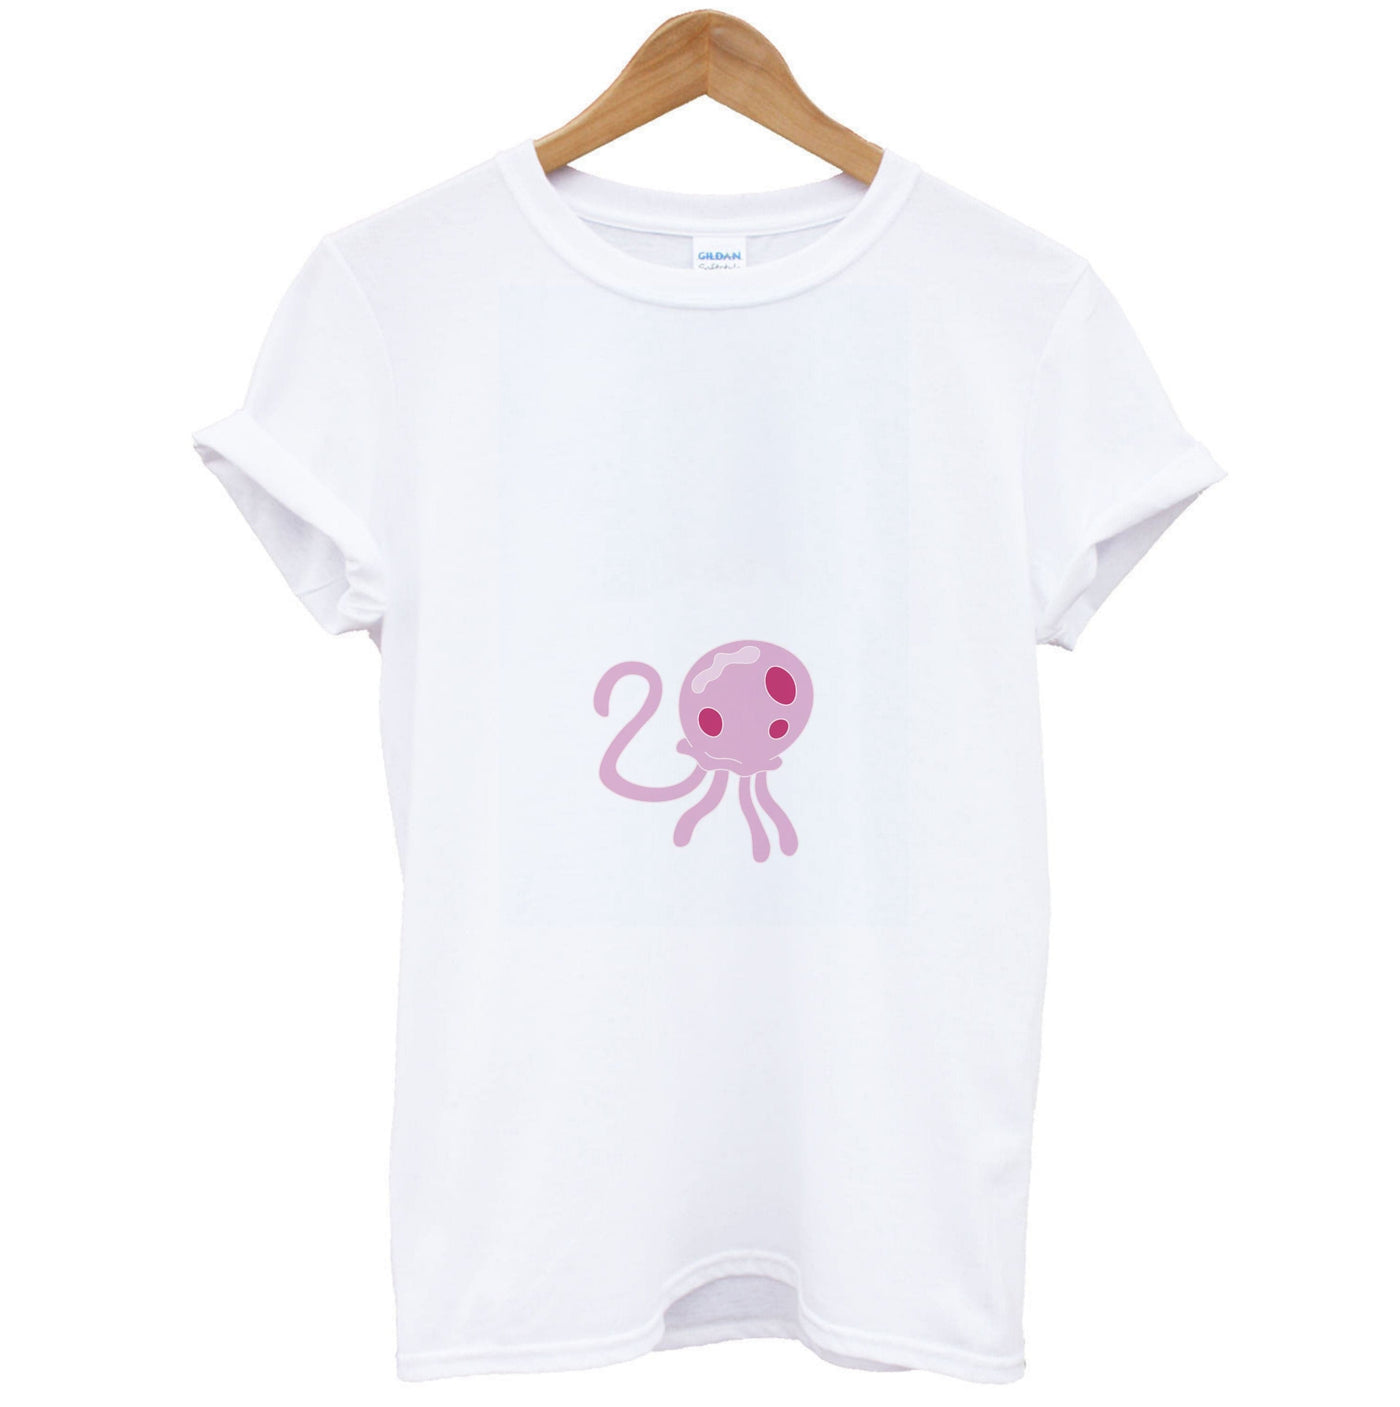 Jellyfish - Spongebob T-Shirt